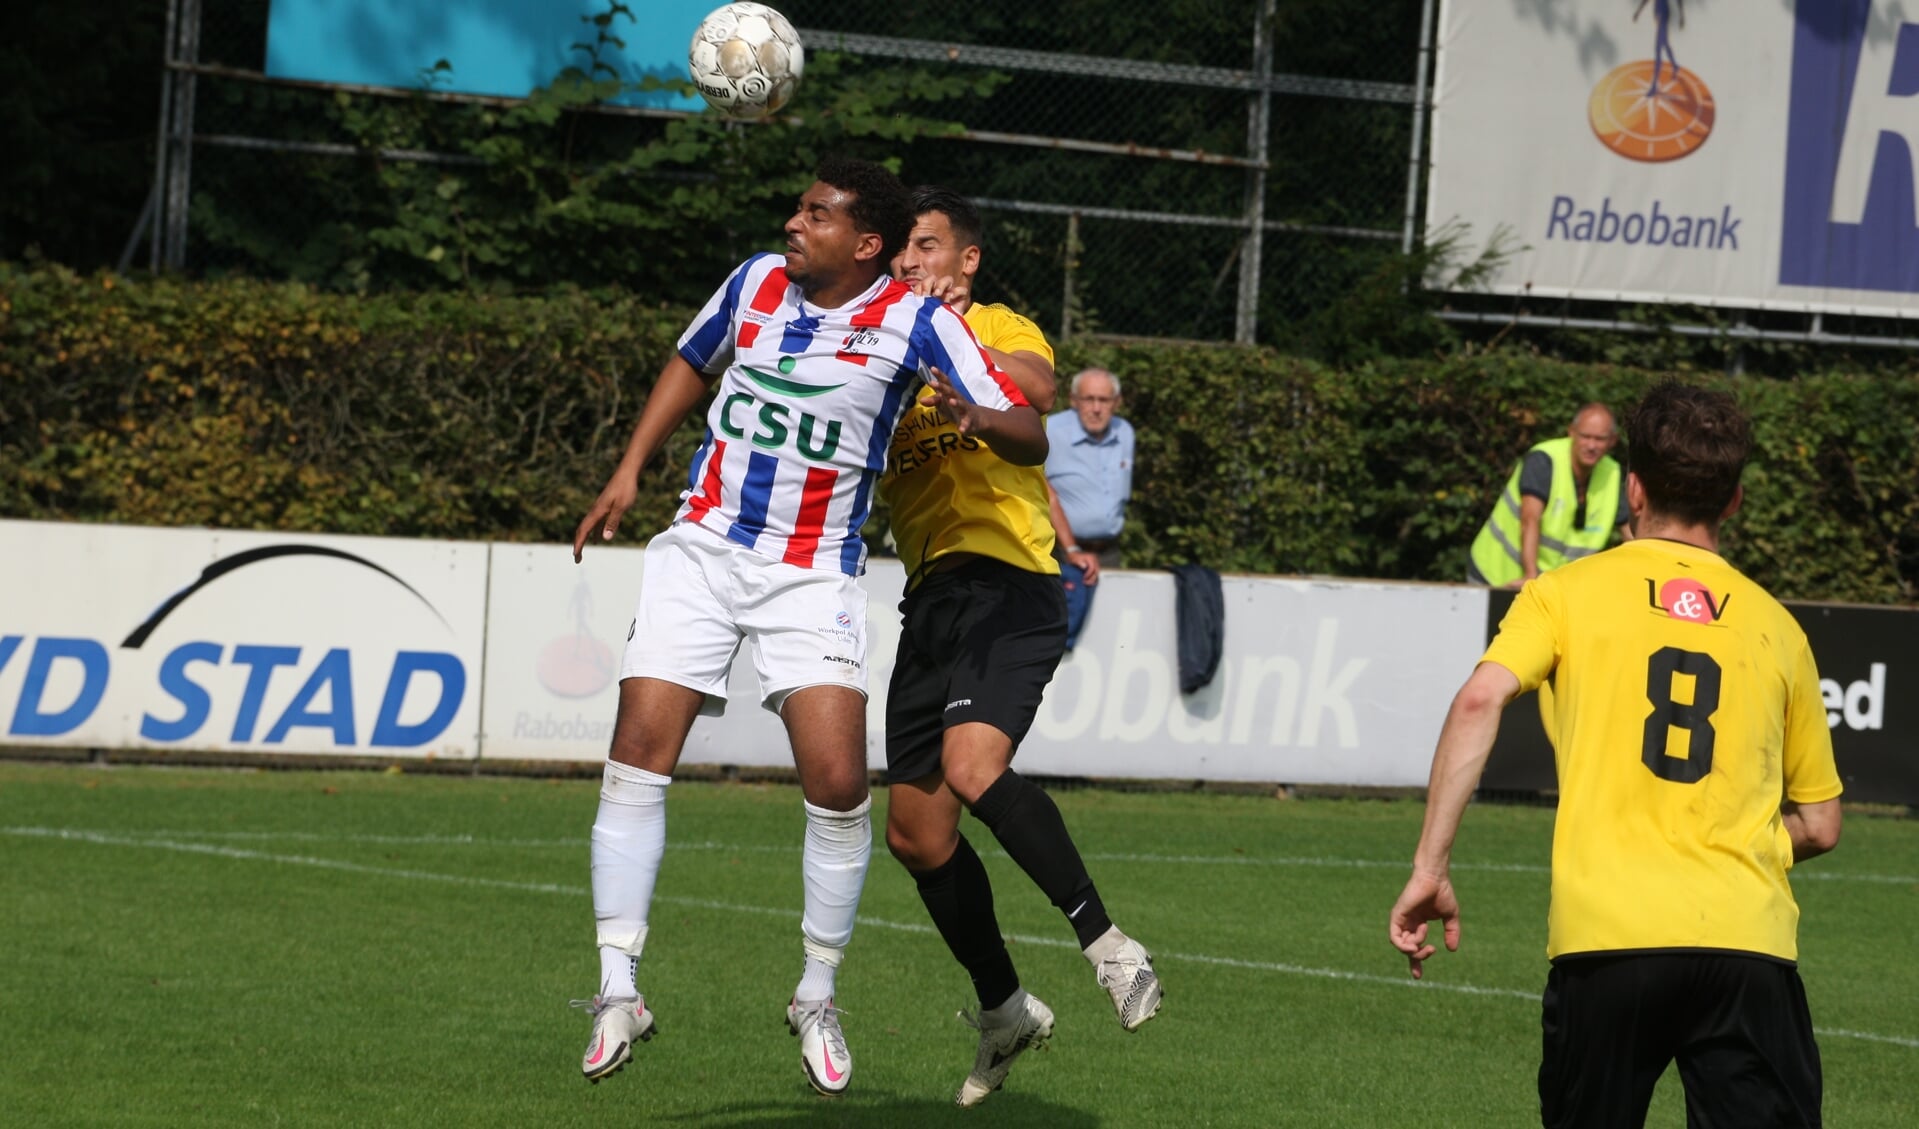 Jaouad Chraou scoorde de 1-0 voor UDI'19 tegen Sportclub Silvolde.